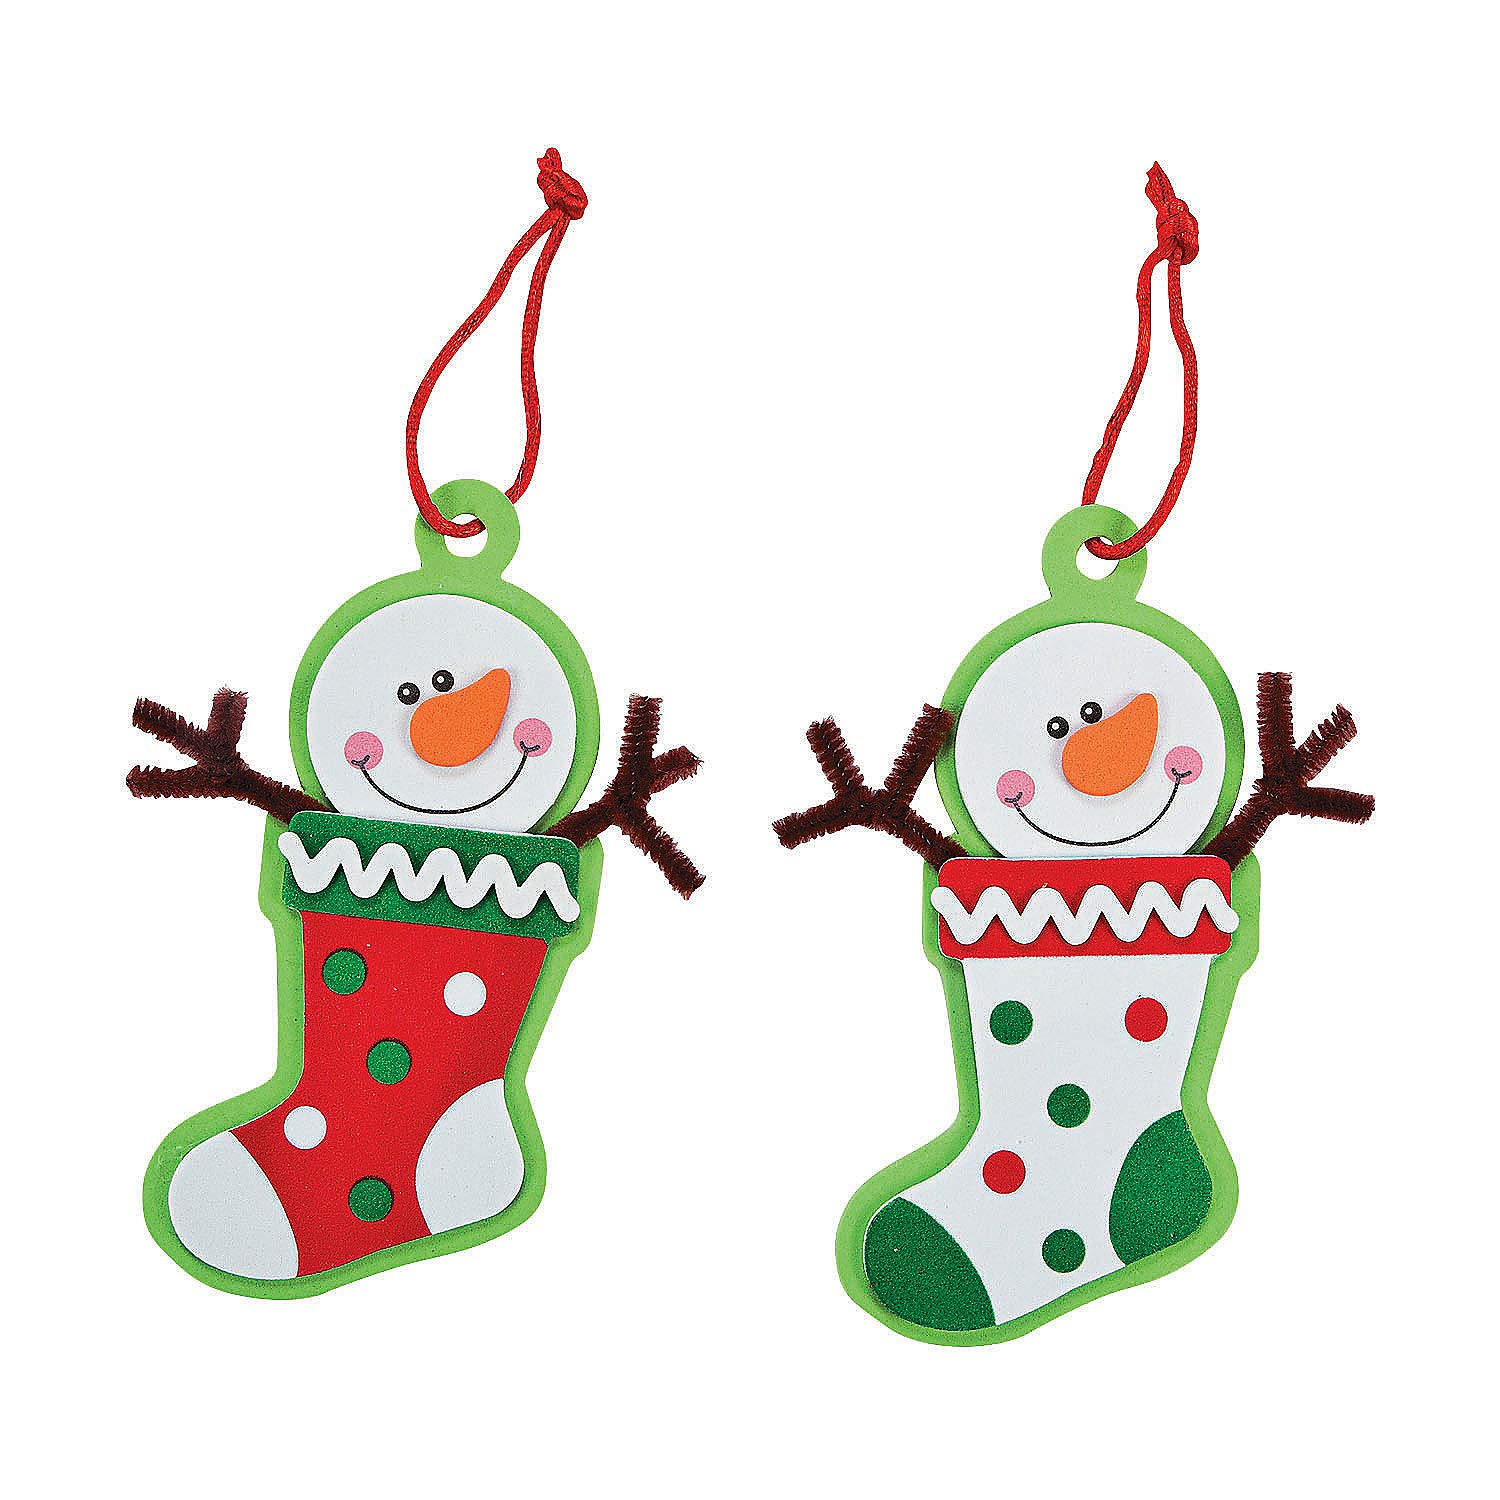 Snowman Stocking Christmas Tree Ornament Craft Kit - Makes 12 - DIY Christmas Crafts for Kids